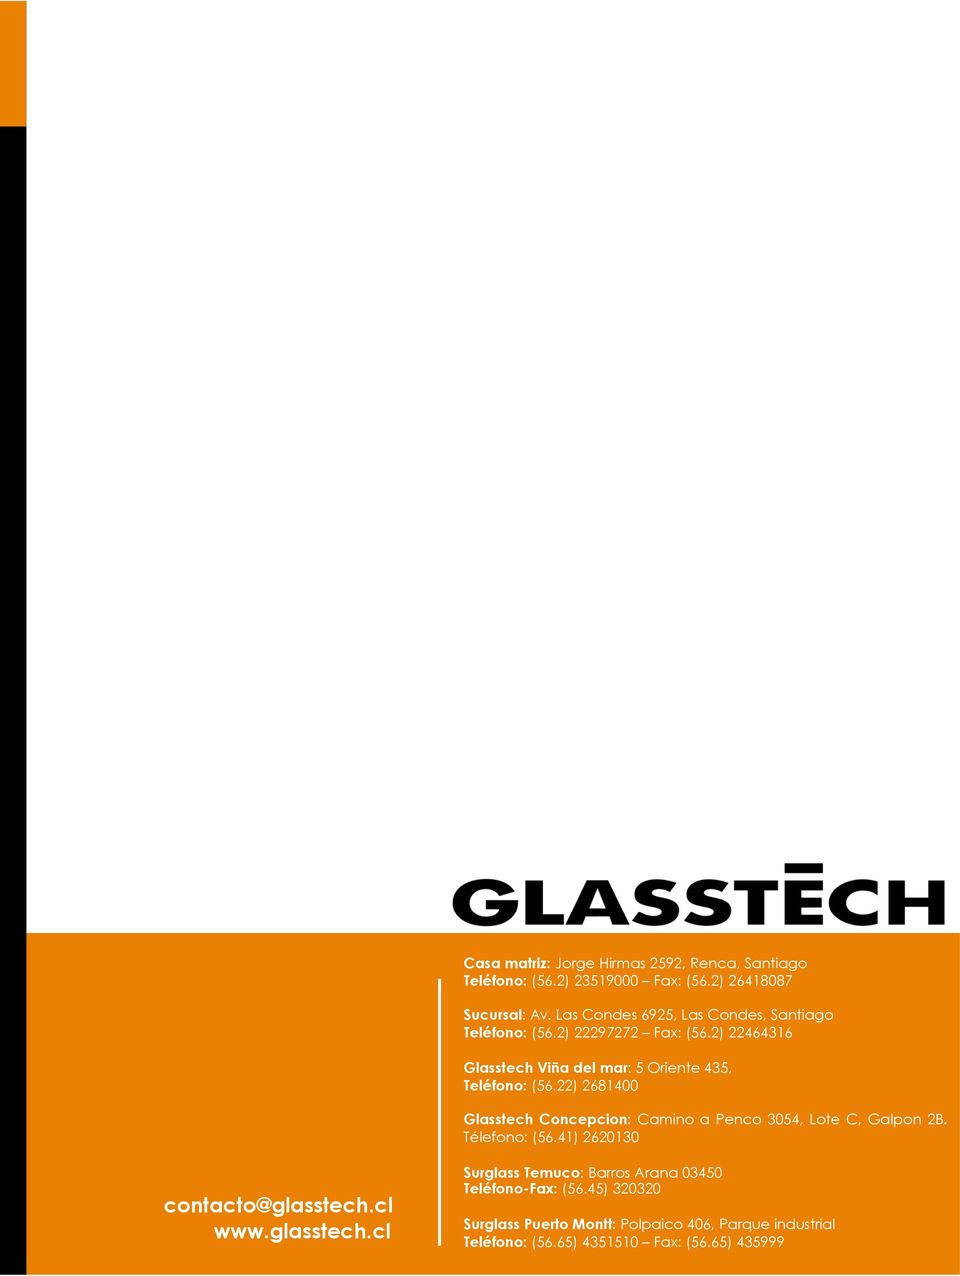 22) 2681400 Glasstech Concepcion: Camino a Penco 054, Lote C, Galpon 2B. Télefono: (56.41) 262010 contacto@glasstech.